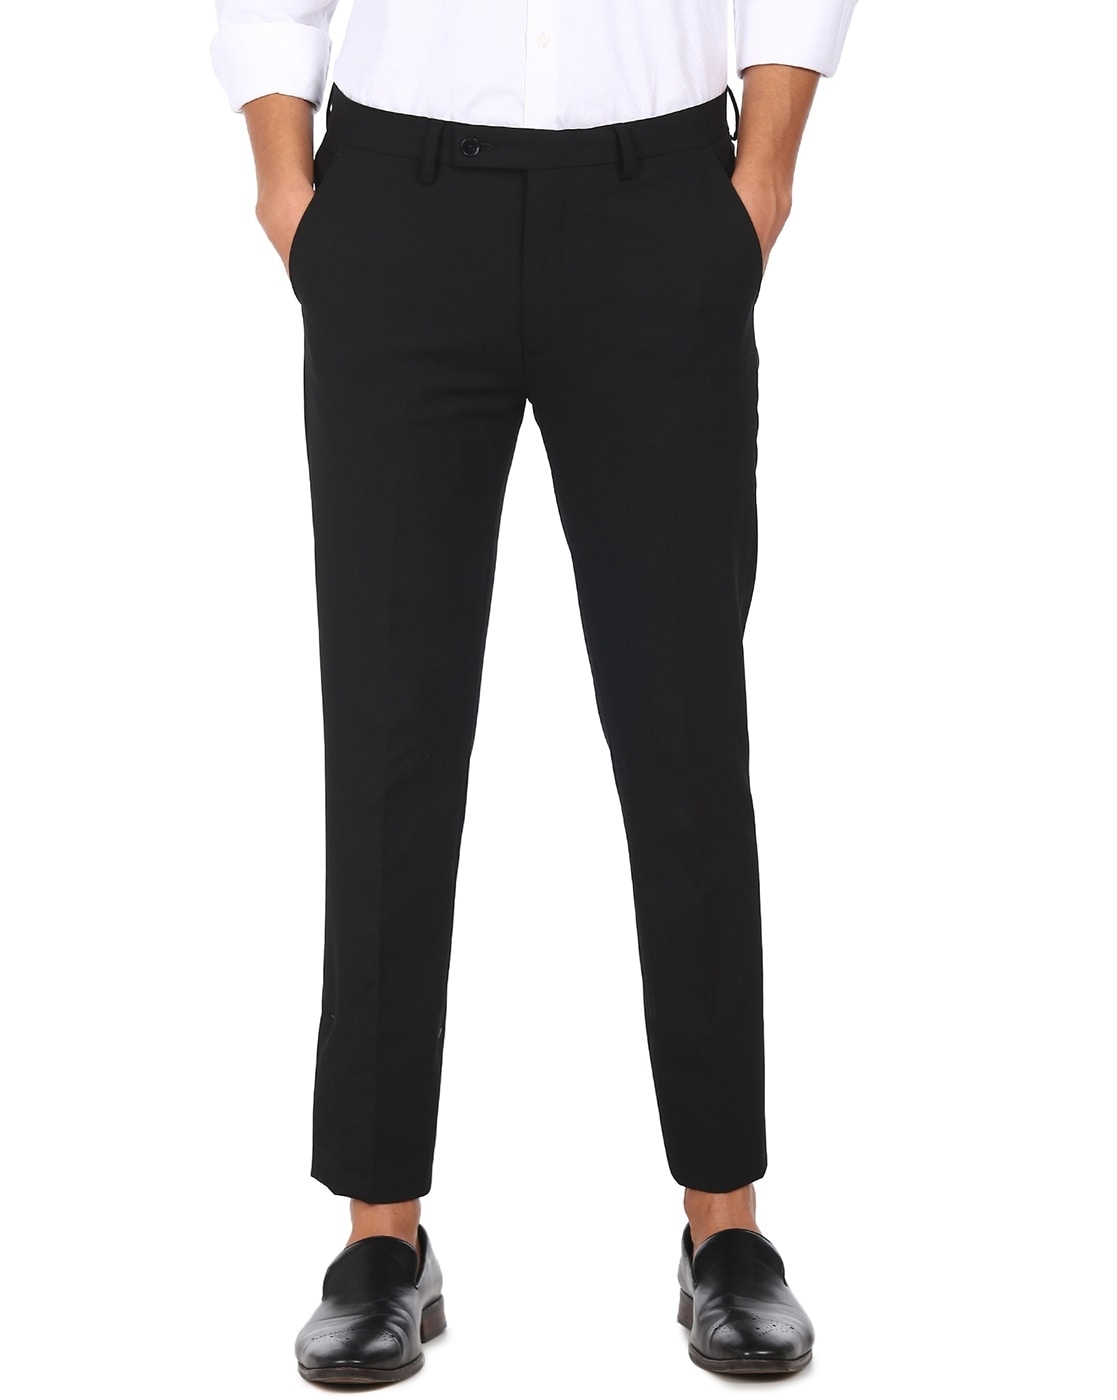 Buy VISHAL MEGA MART BLACKTIE Men Solid Black Formal Trousers at Amazonin